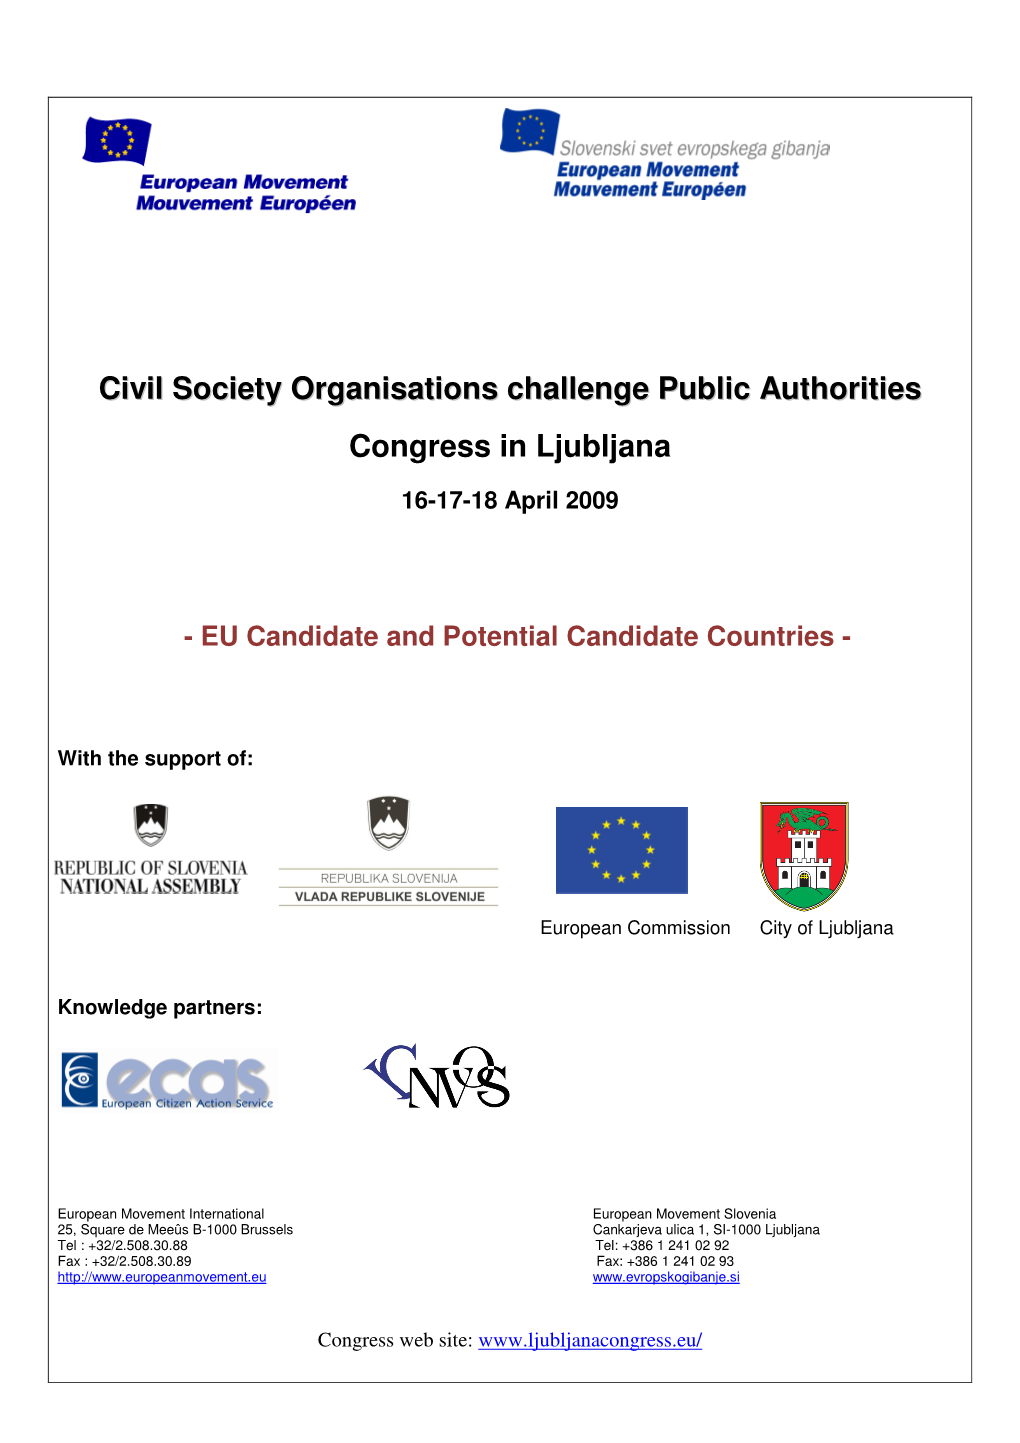 Civil Society Organisations Challenge Public Authorities Congress in Ljubljana